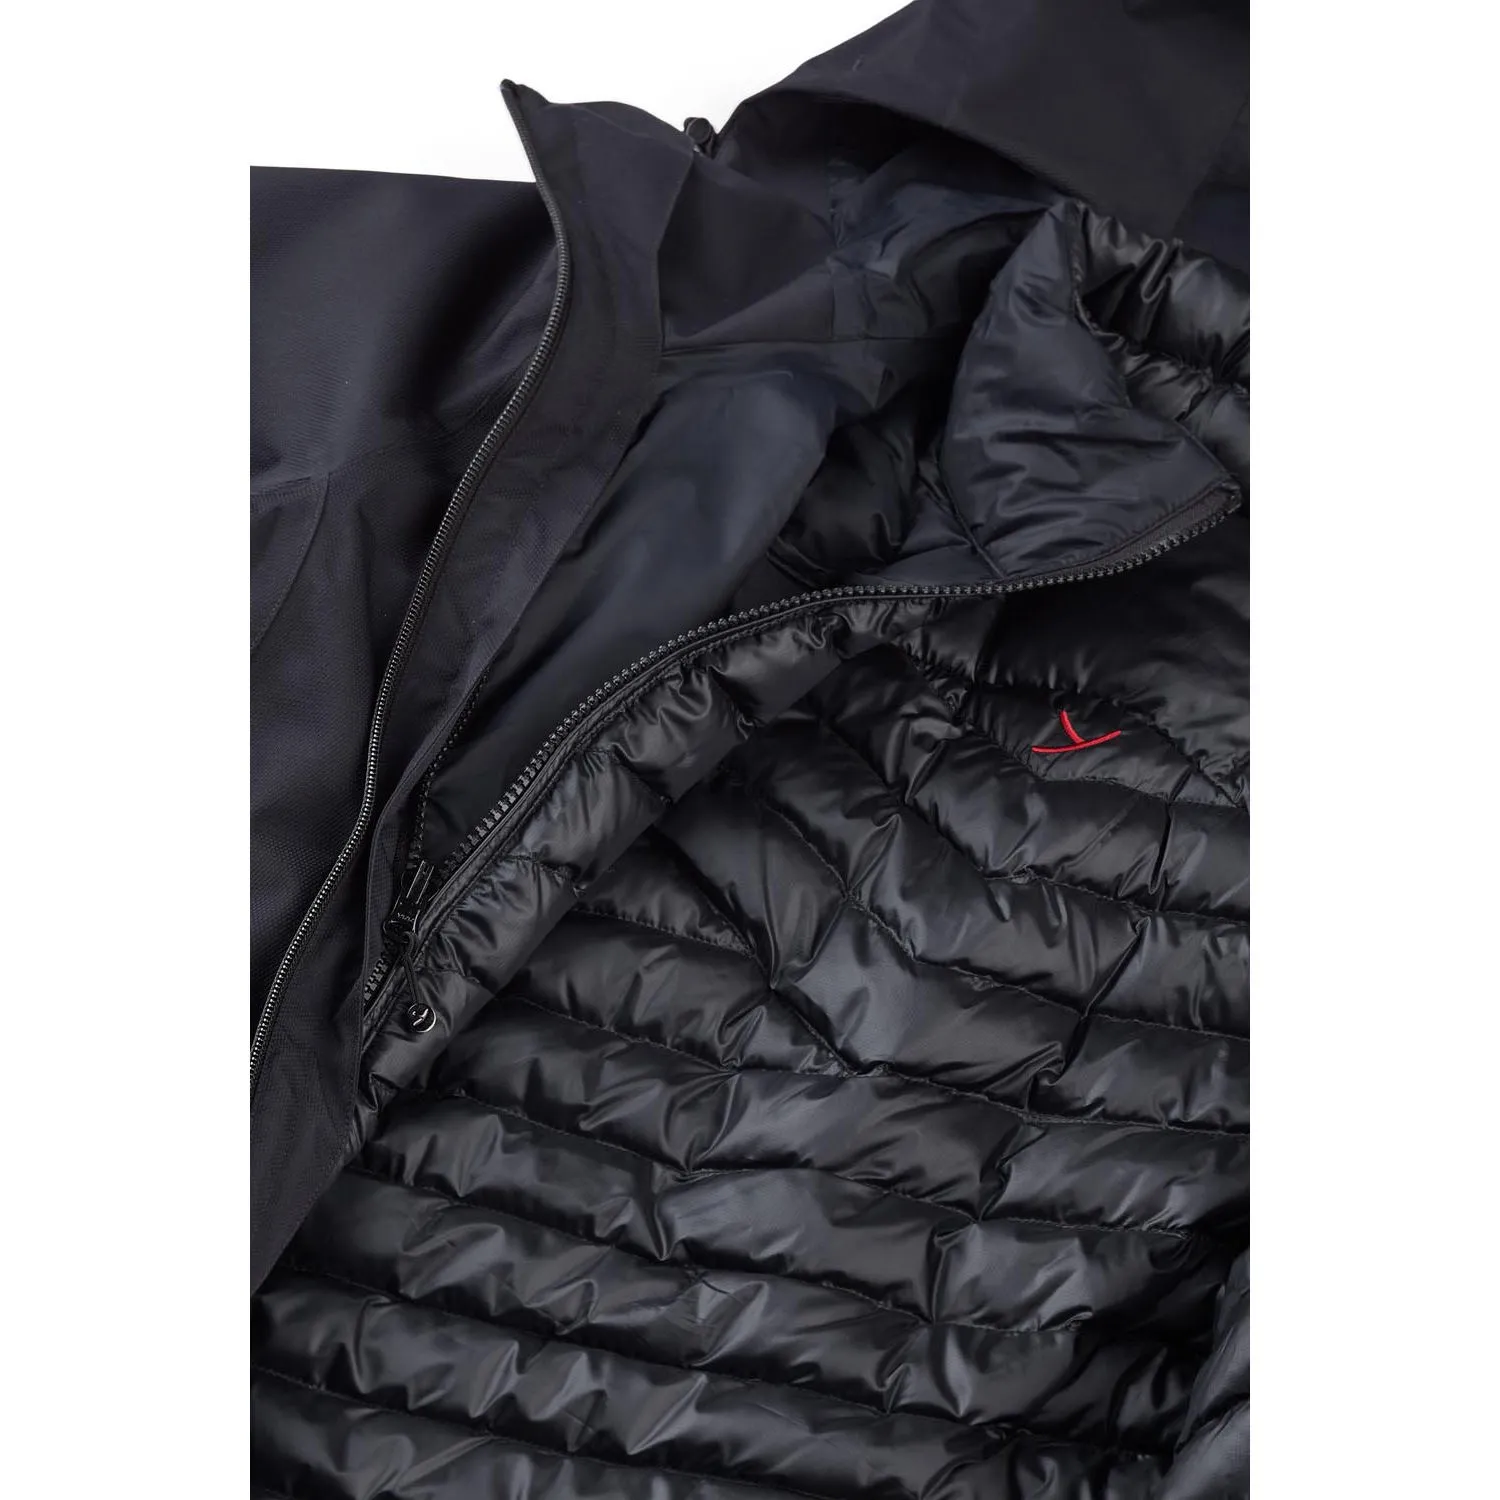 55_Nao-1059-3-in-1-jacket-for-men-Y-by-Nordisk-black-04.jpg